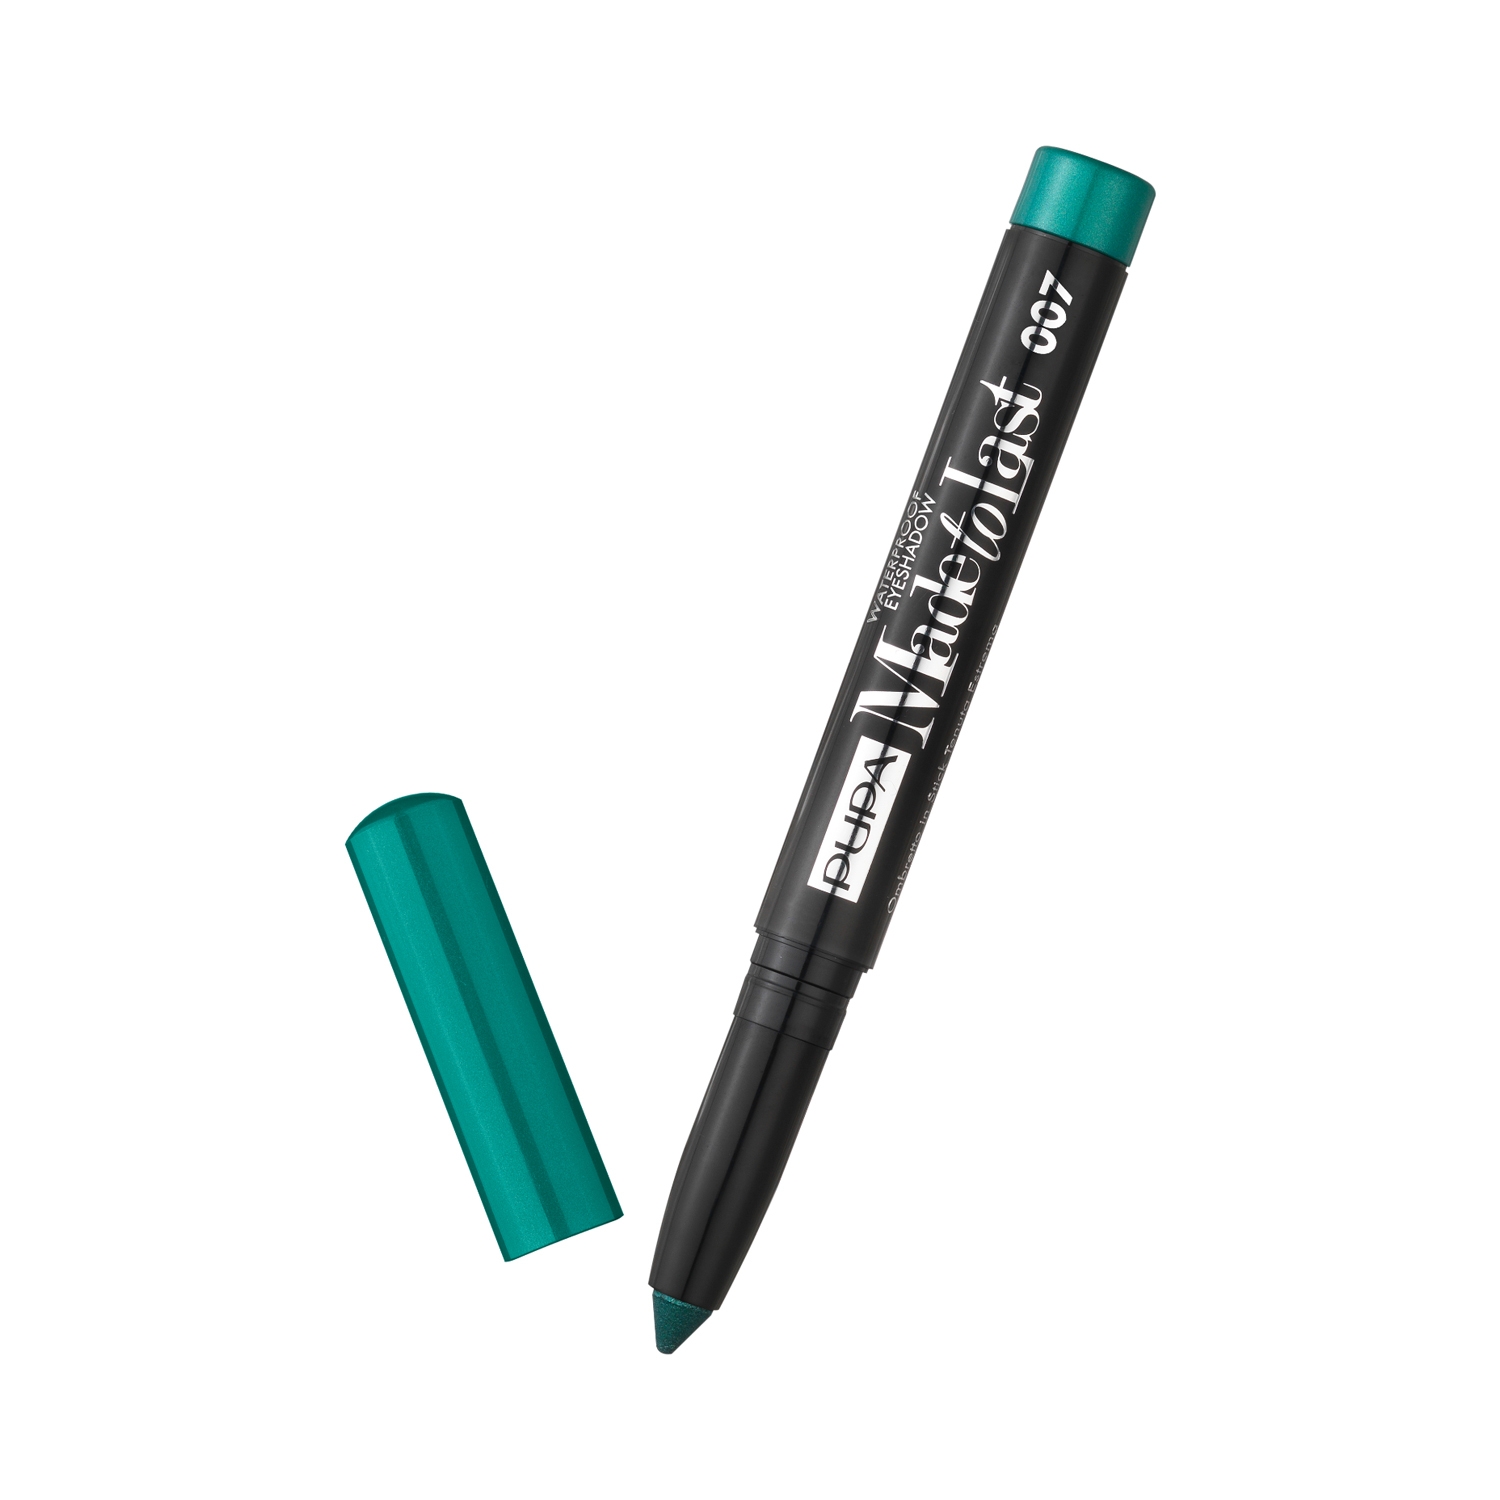 Pupa Milano | Pupa Milano Made To Last Waterproof Long Lasting Stick Eyeshadow - 007 Emerald (1.4g)